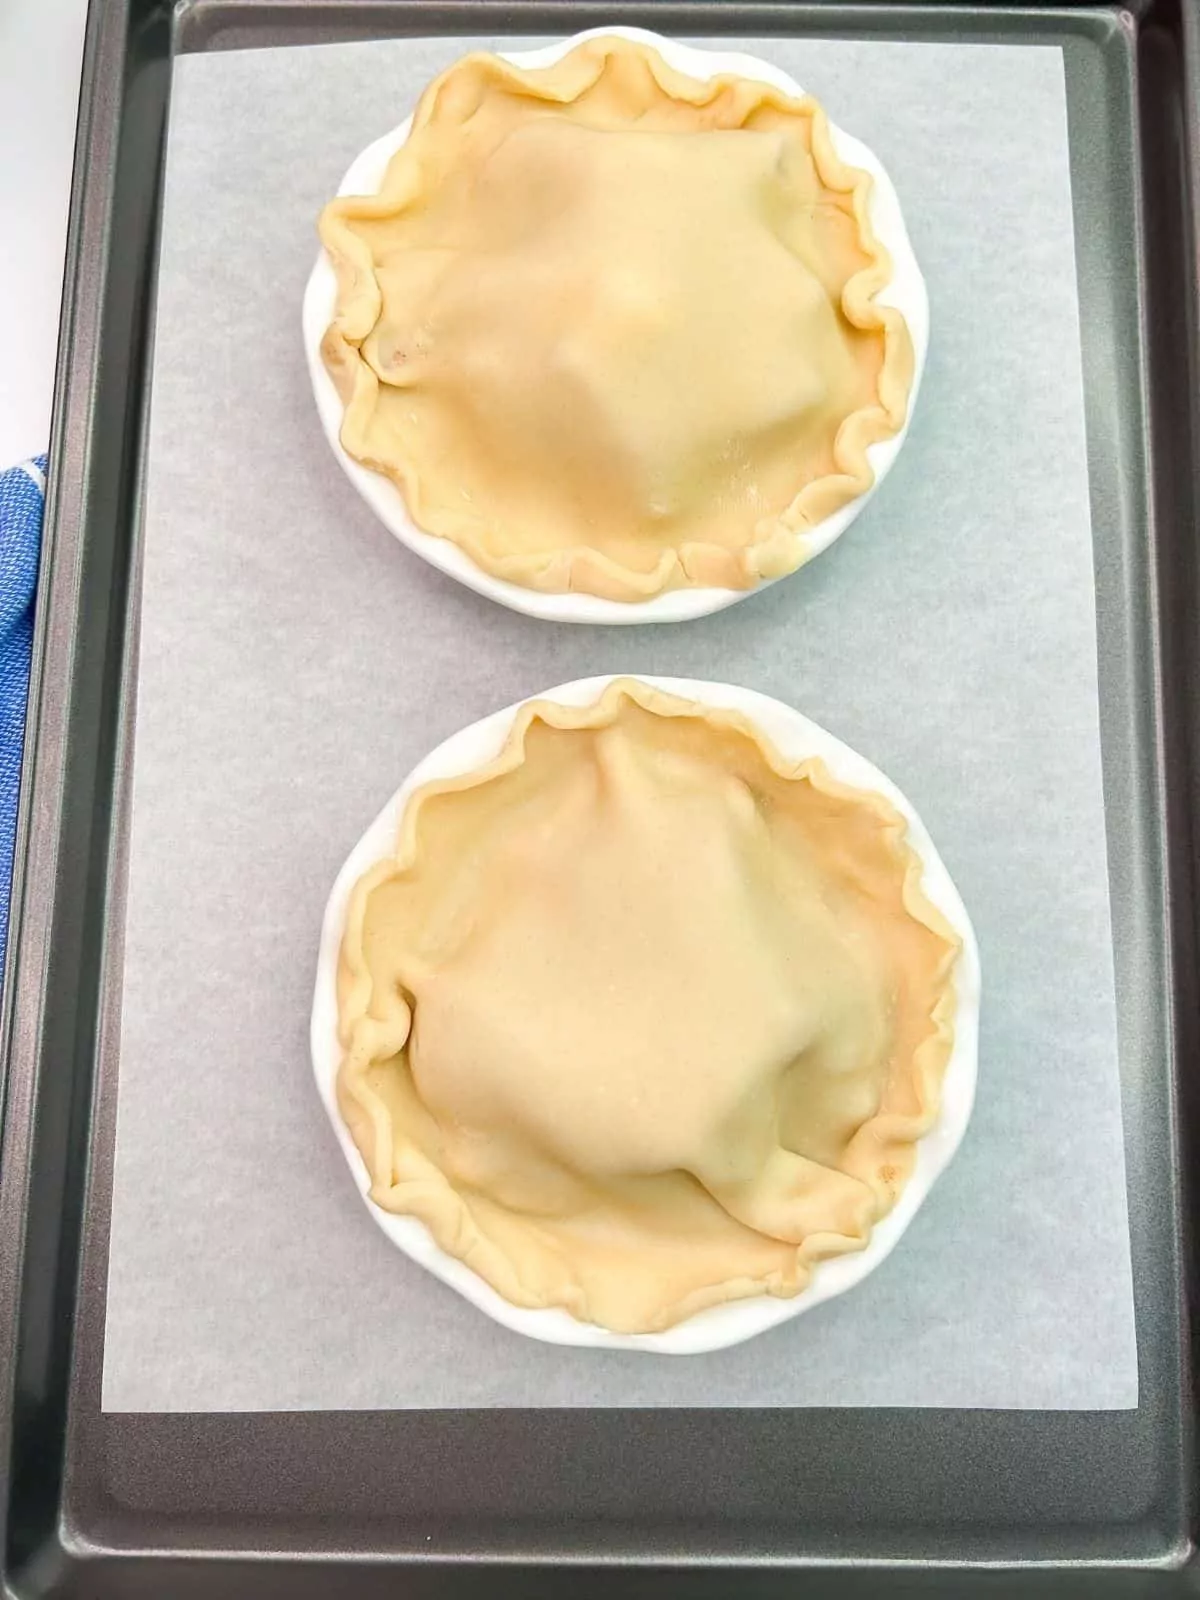 unbaked apple pies on baking tray.